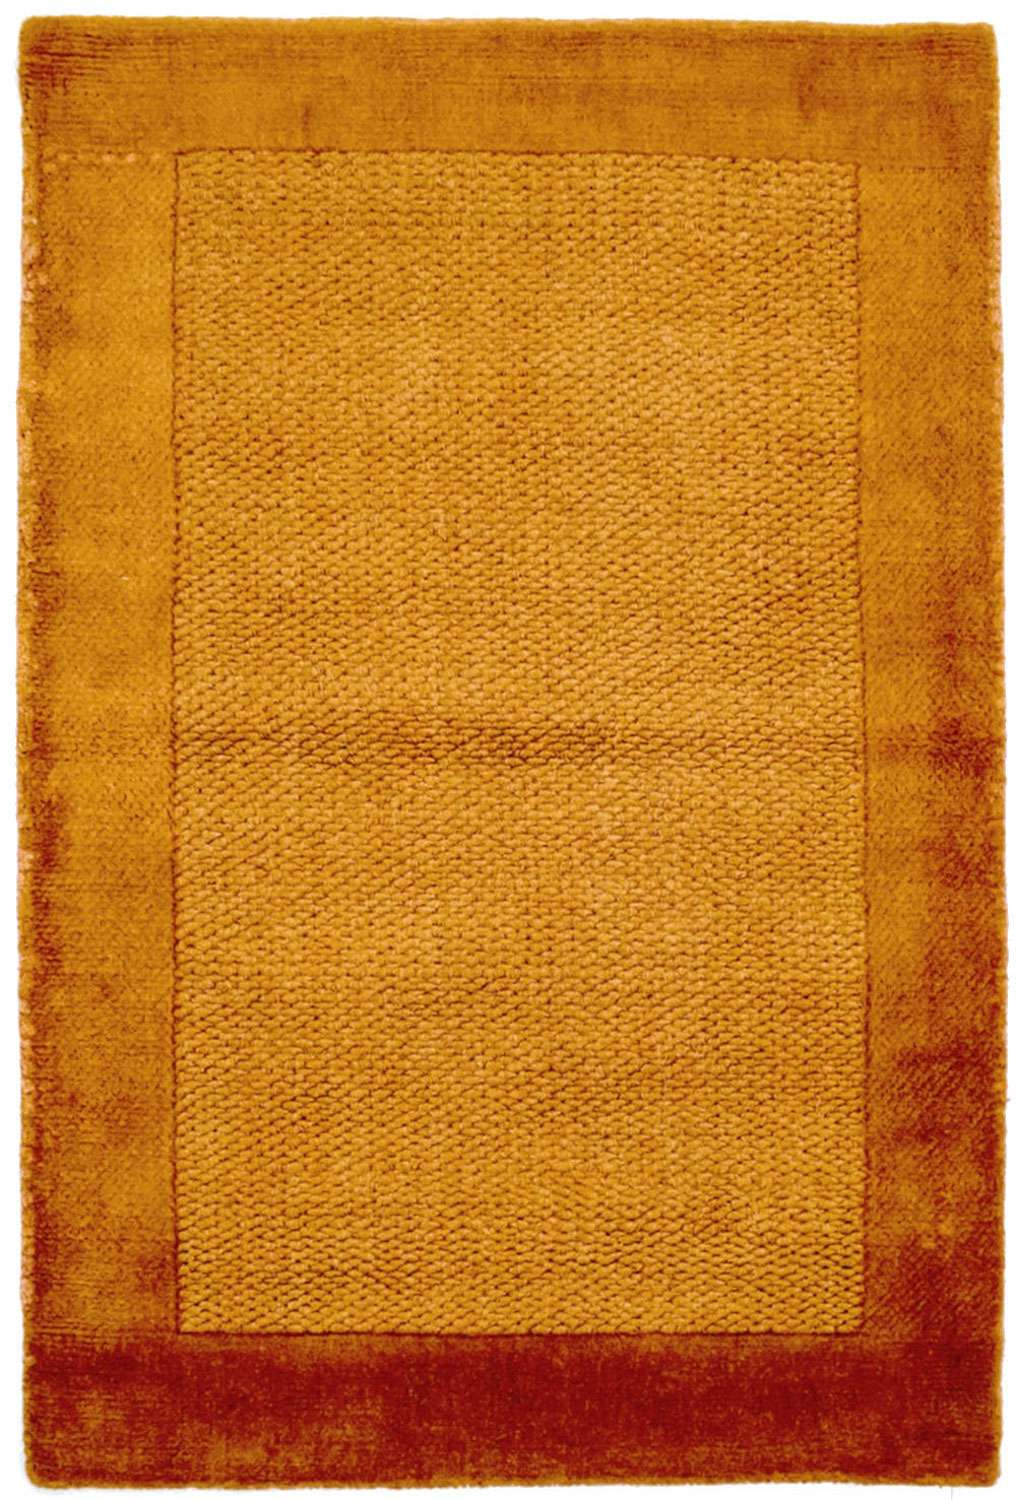 Wool Rug - 150 x 100 cm - orange